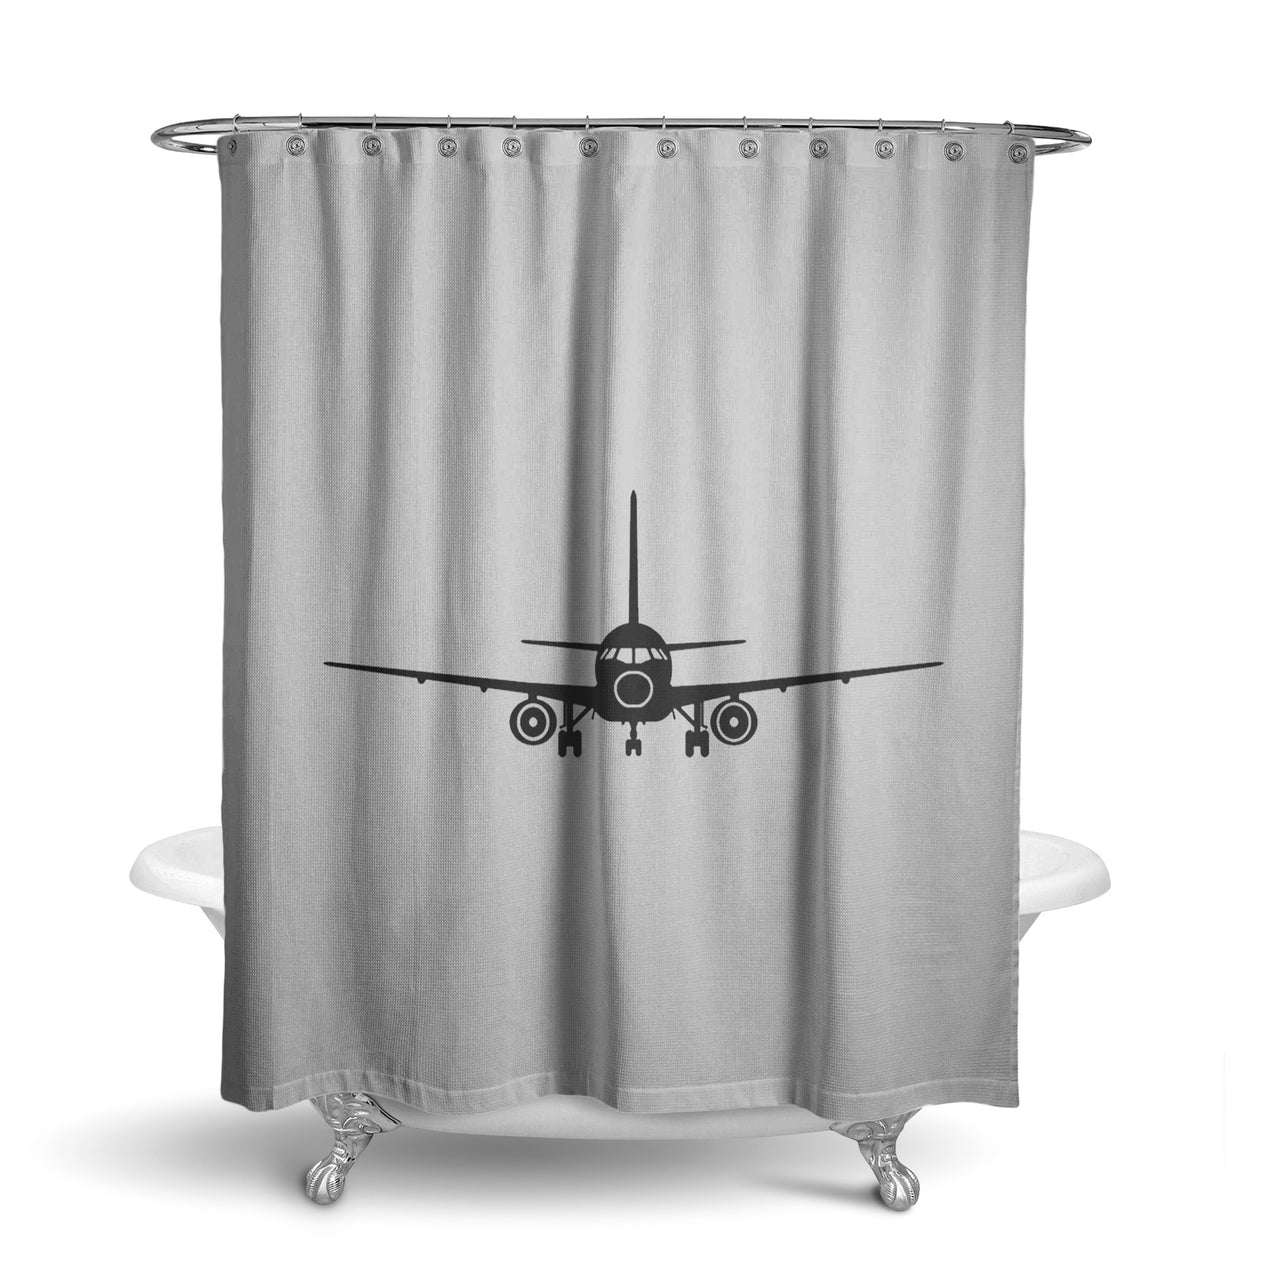 Sukhoi Superjet 100 Silhouette Designed Shower Curtains